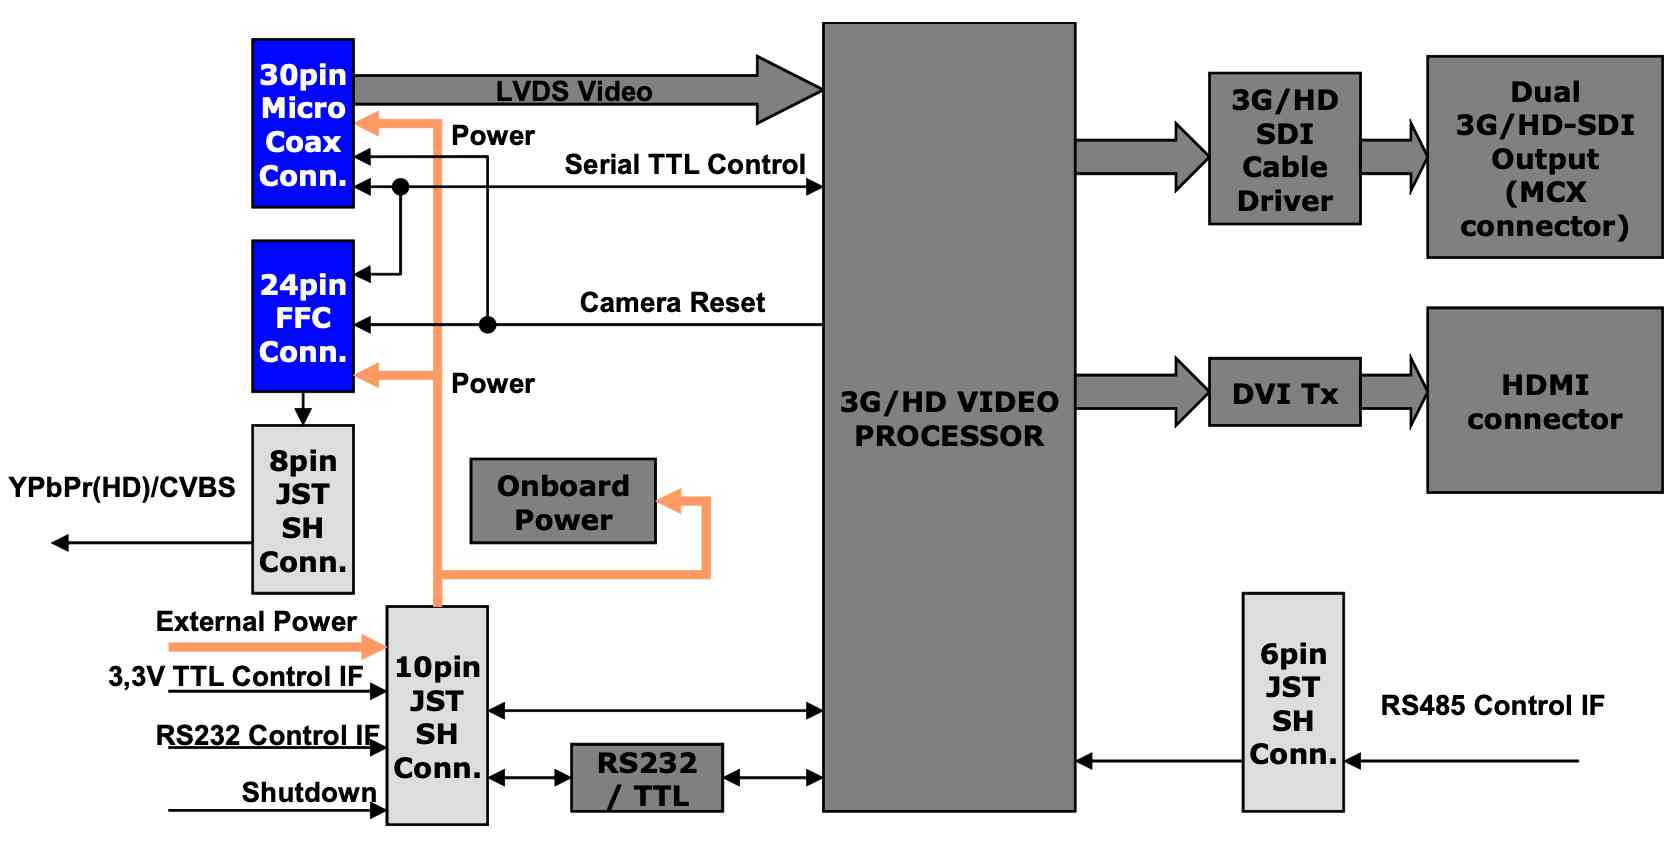 TL7052 |  HDMI Interface 